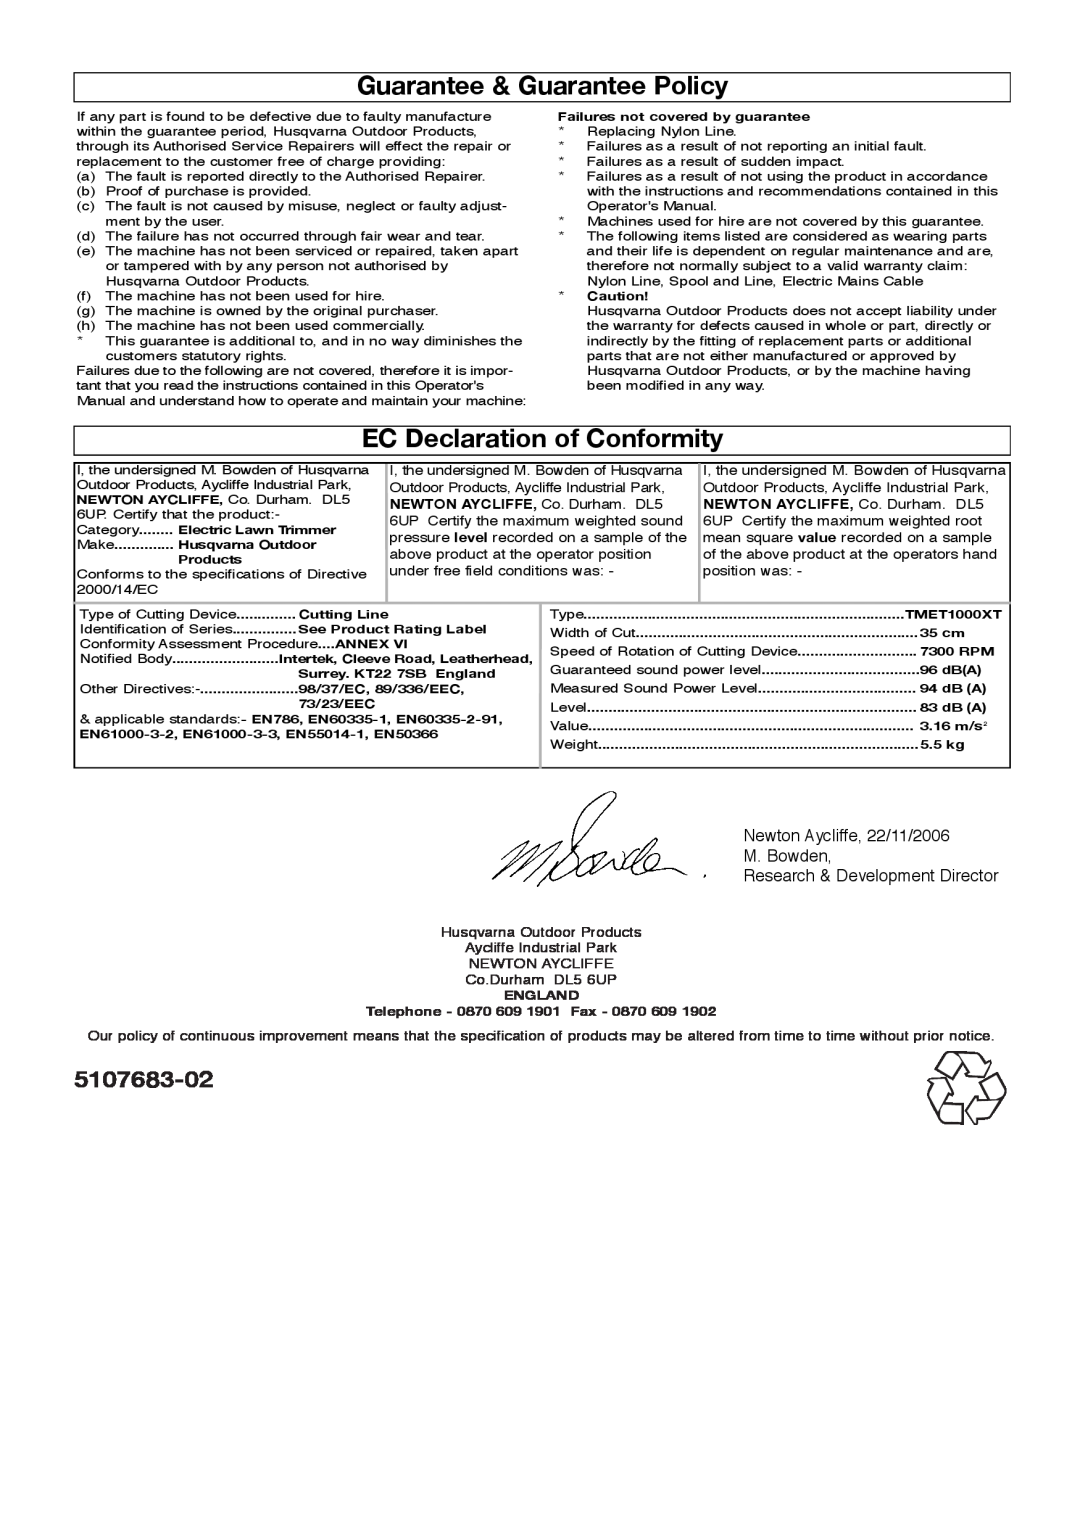 Flymo 1000XT manual Guarantee & Guarantee Policy, EC Declaration of Conformity, 5107683-02, Co.Durham DL5 6UP 